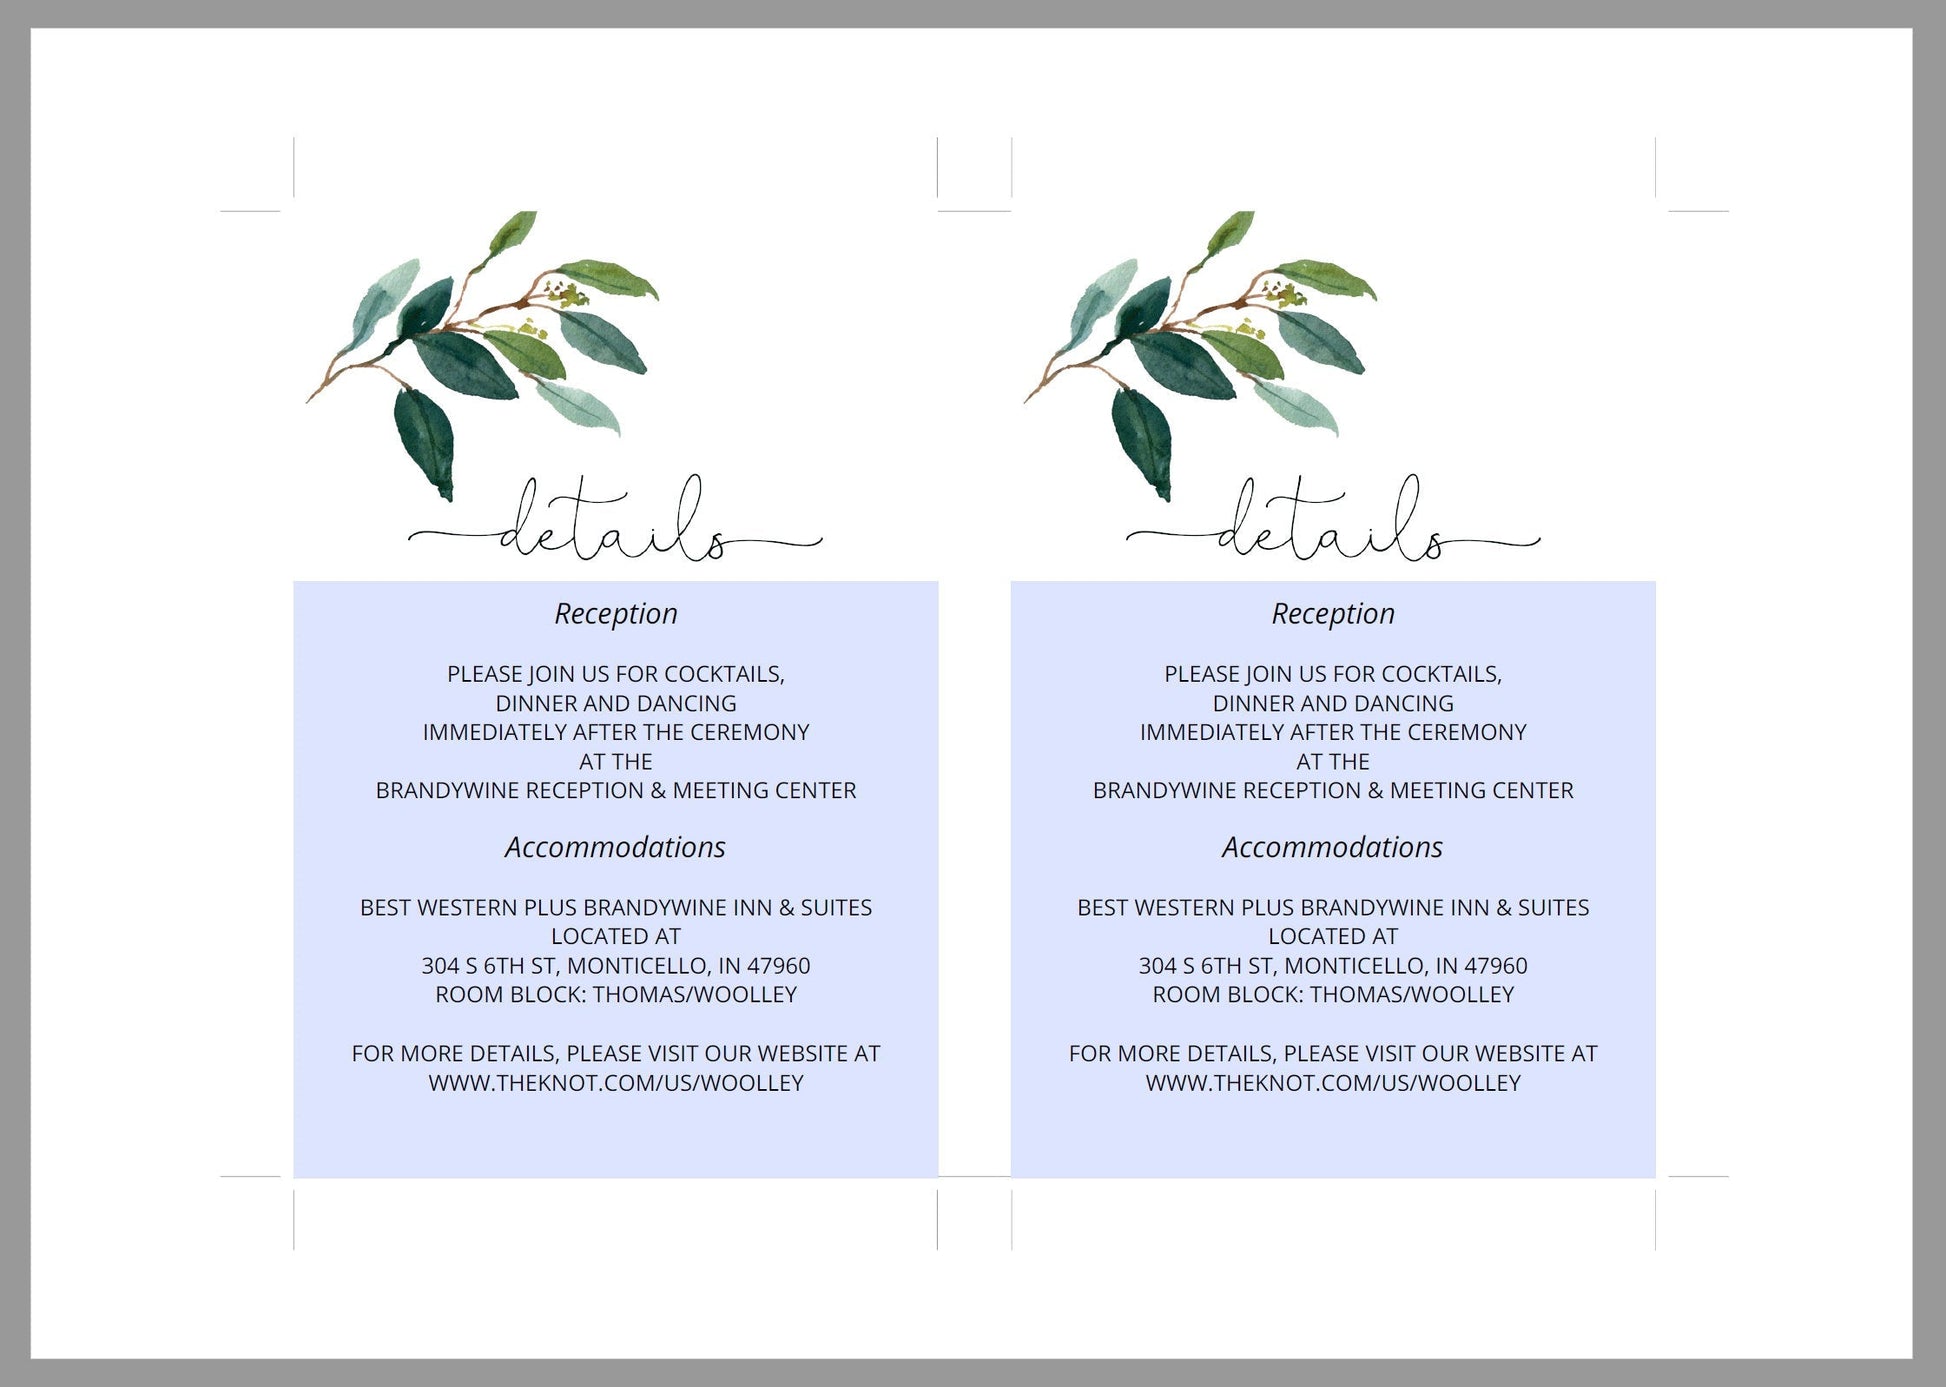 Printable Greenery Rustic Wedding Invitation Set Editable Template, DIY Instant Download Invites, Invitation Suite- Anna WEDDING INVITATION SETS SAVVY PAPER CO